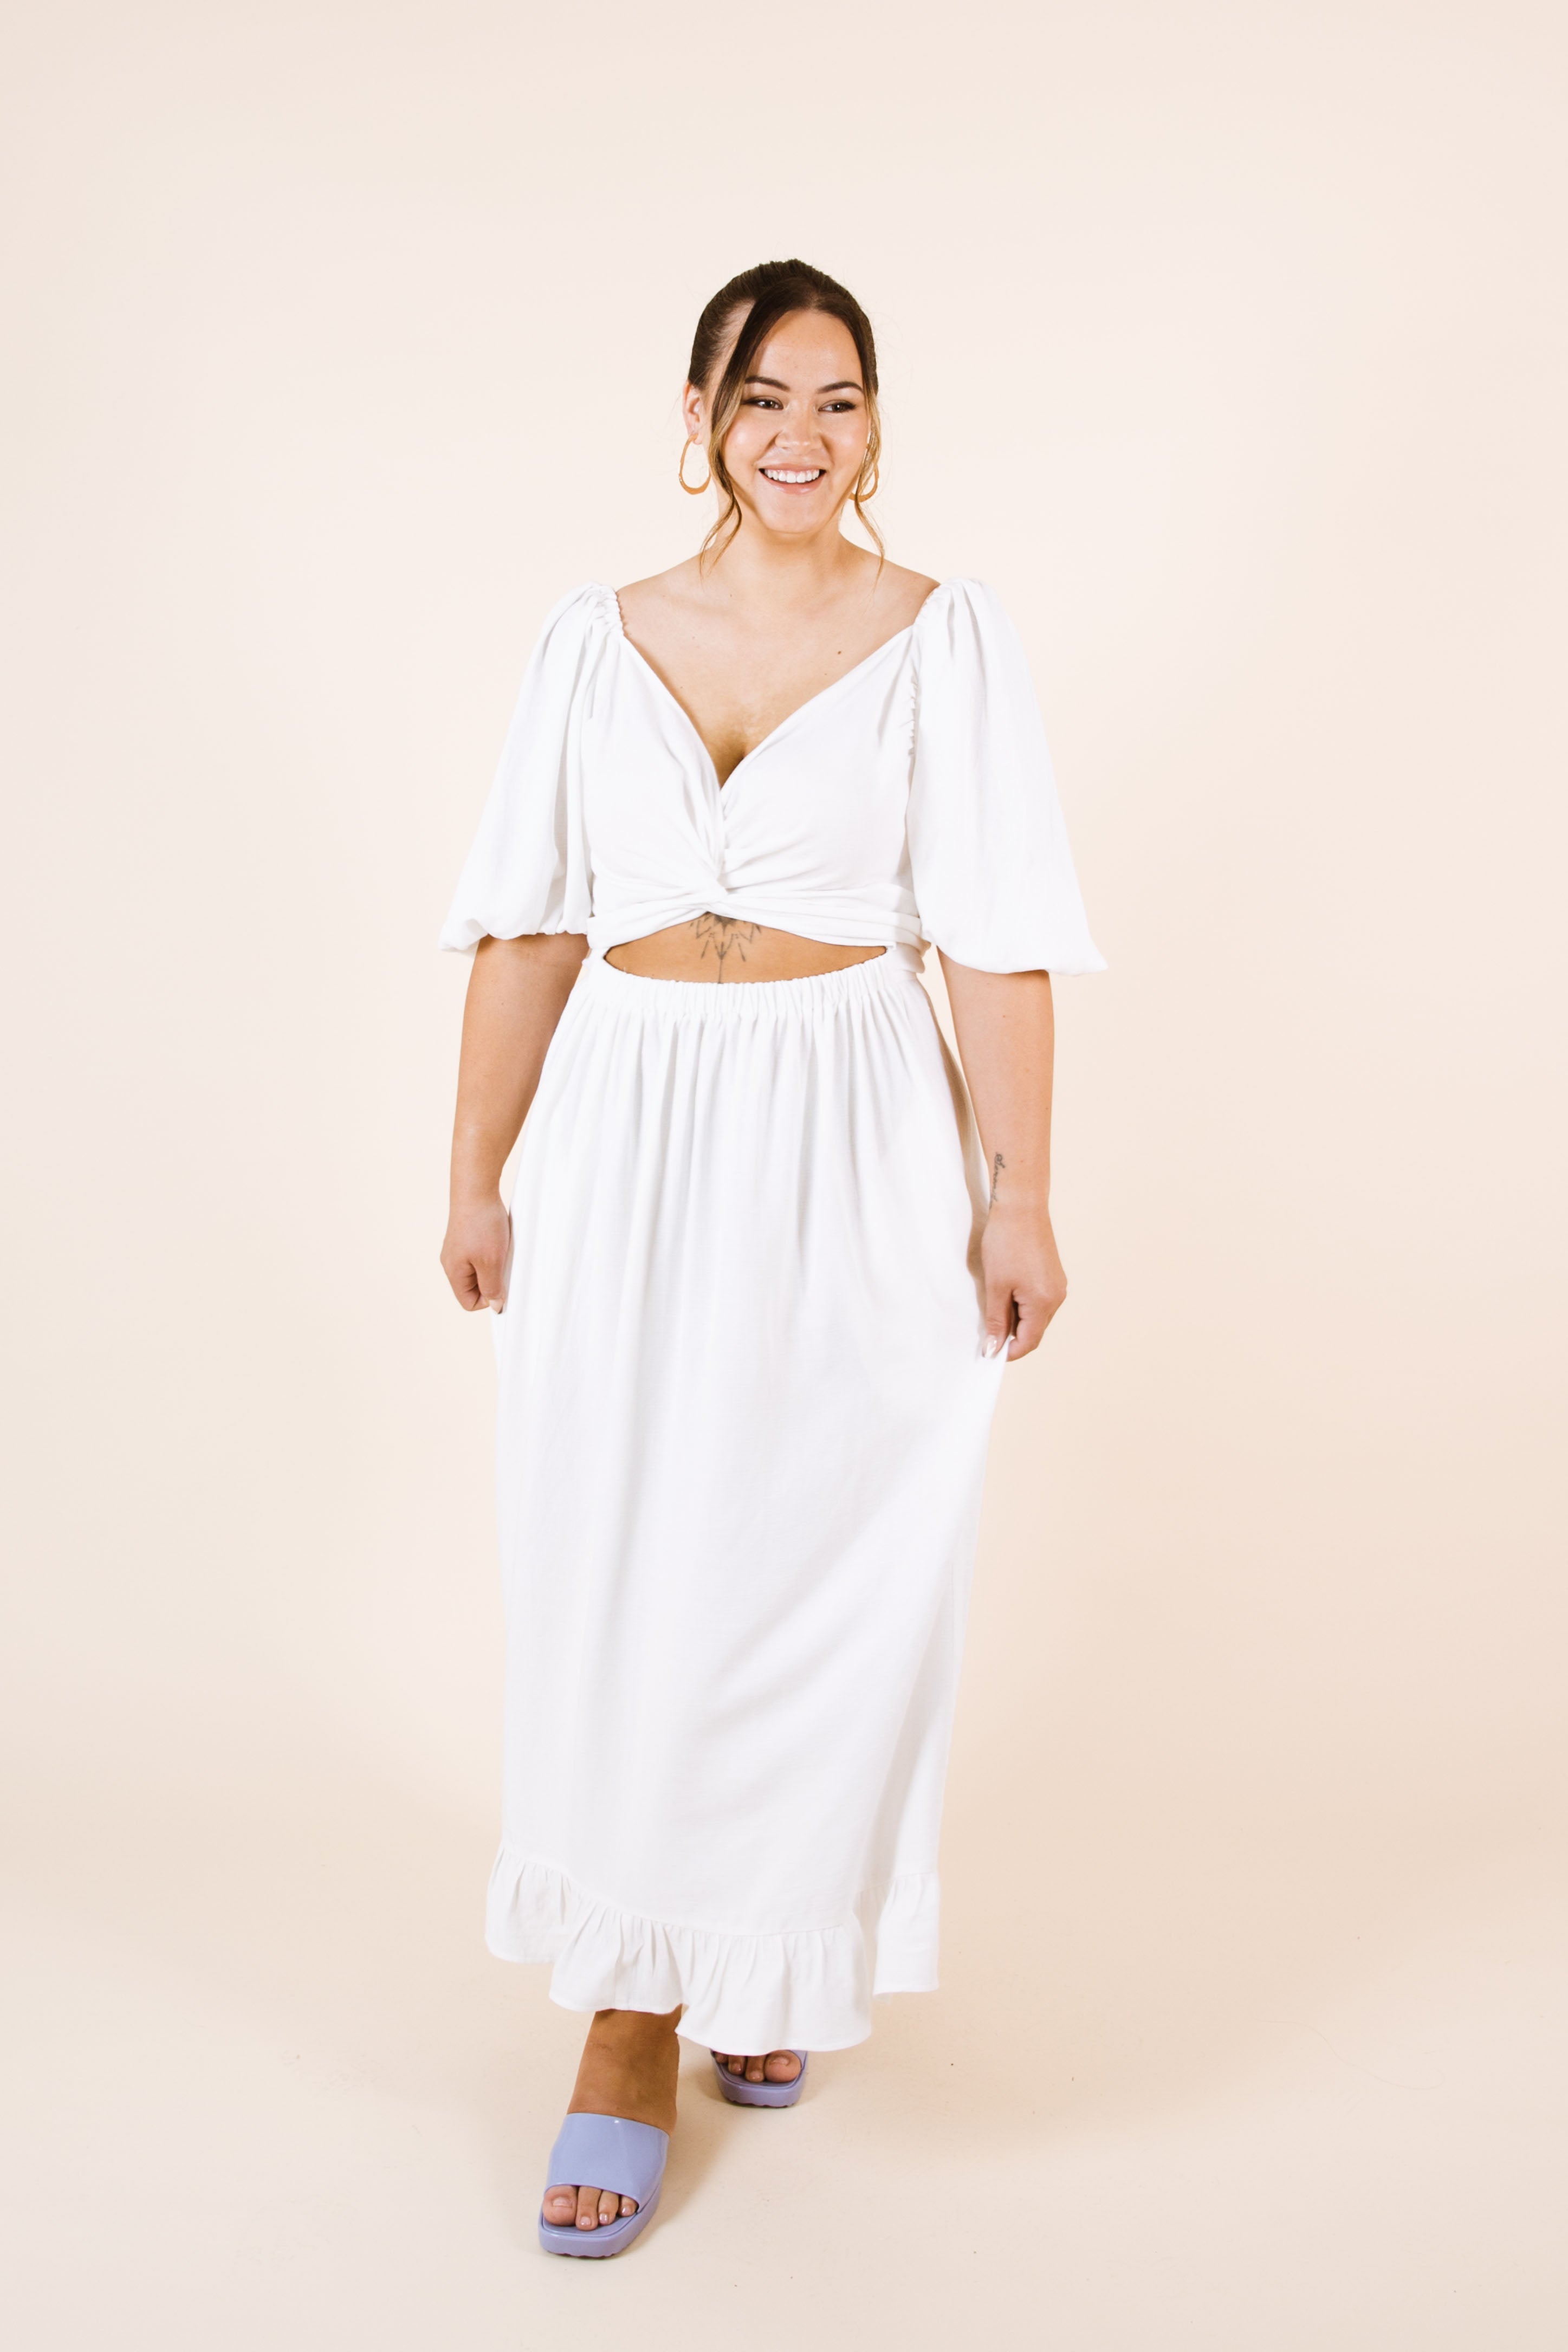 Estella Curve Dress / Top / Skirt Pattern